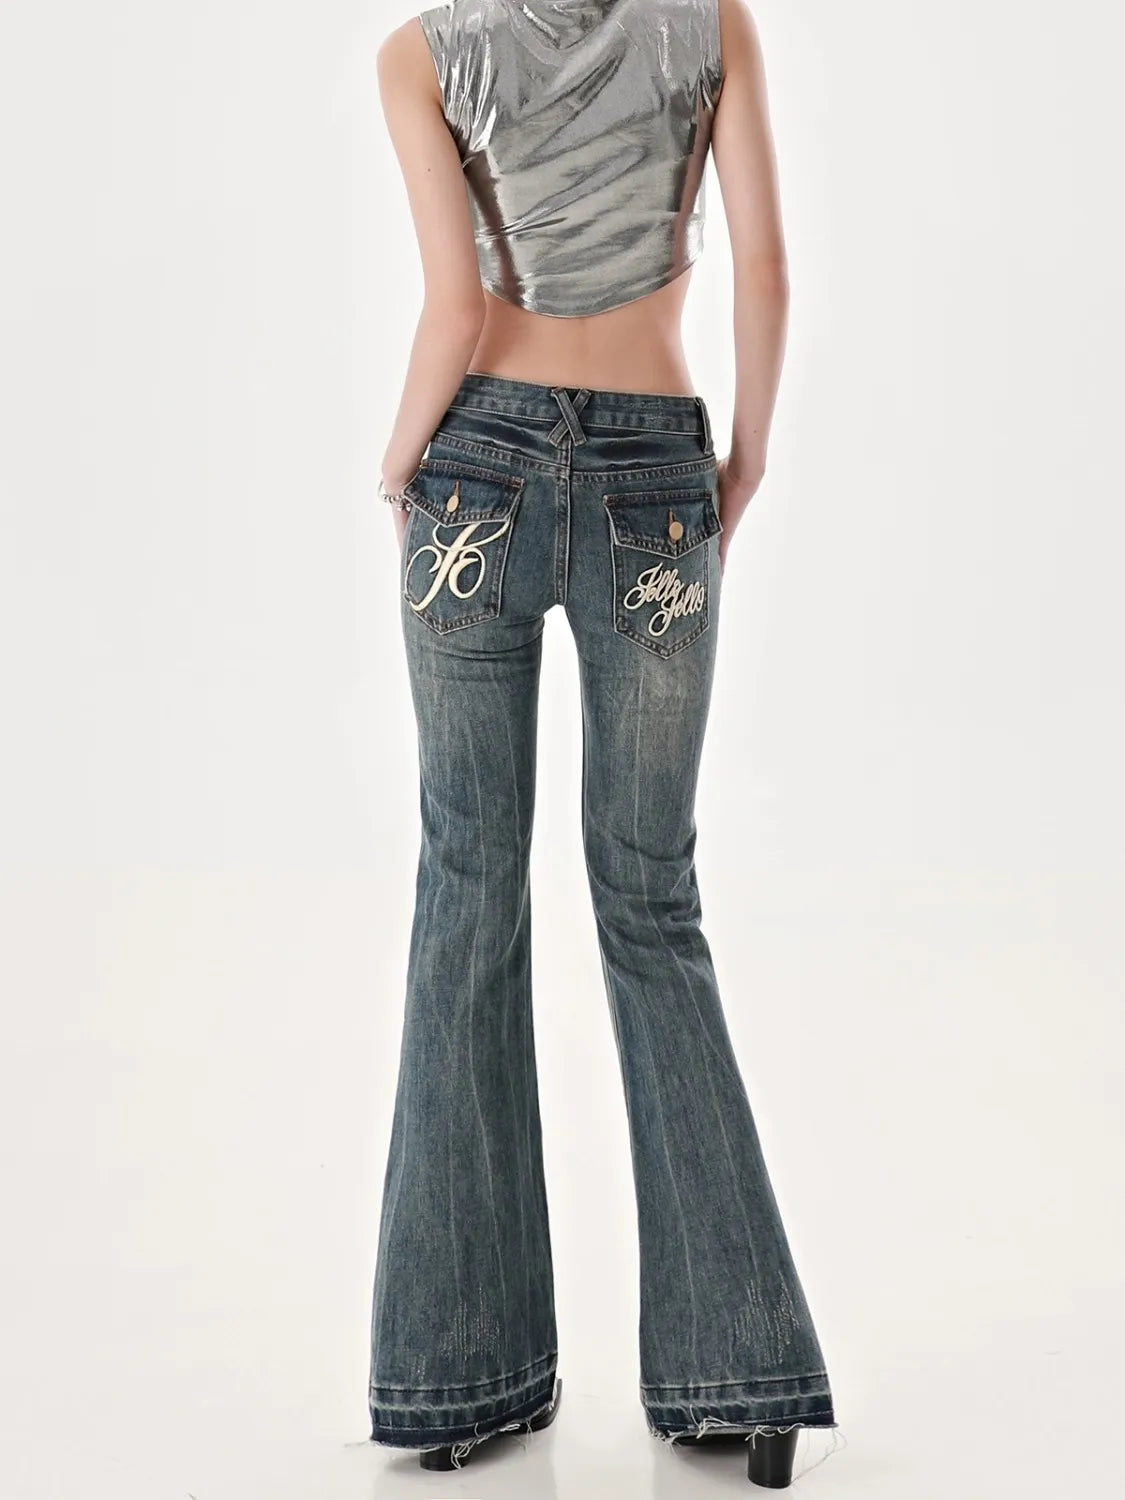 Low Waist Jeans Girls Women Autumn Vintage American High Street Spicy Y2k Design Sense Slim Fit Straight Tube Micro Flare Pants - Lizard Vigilante